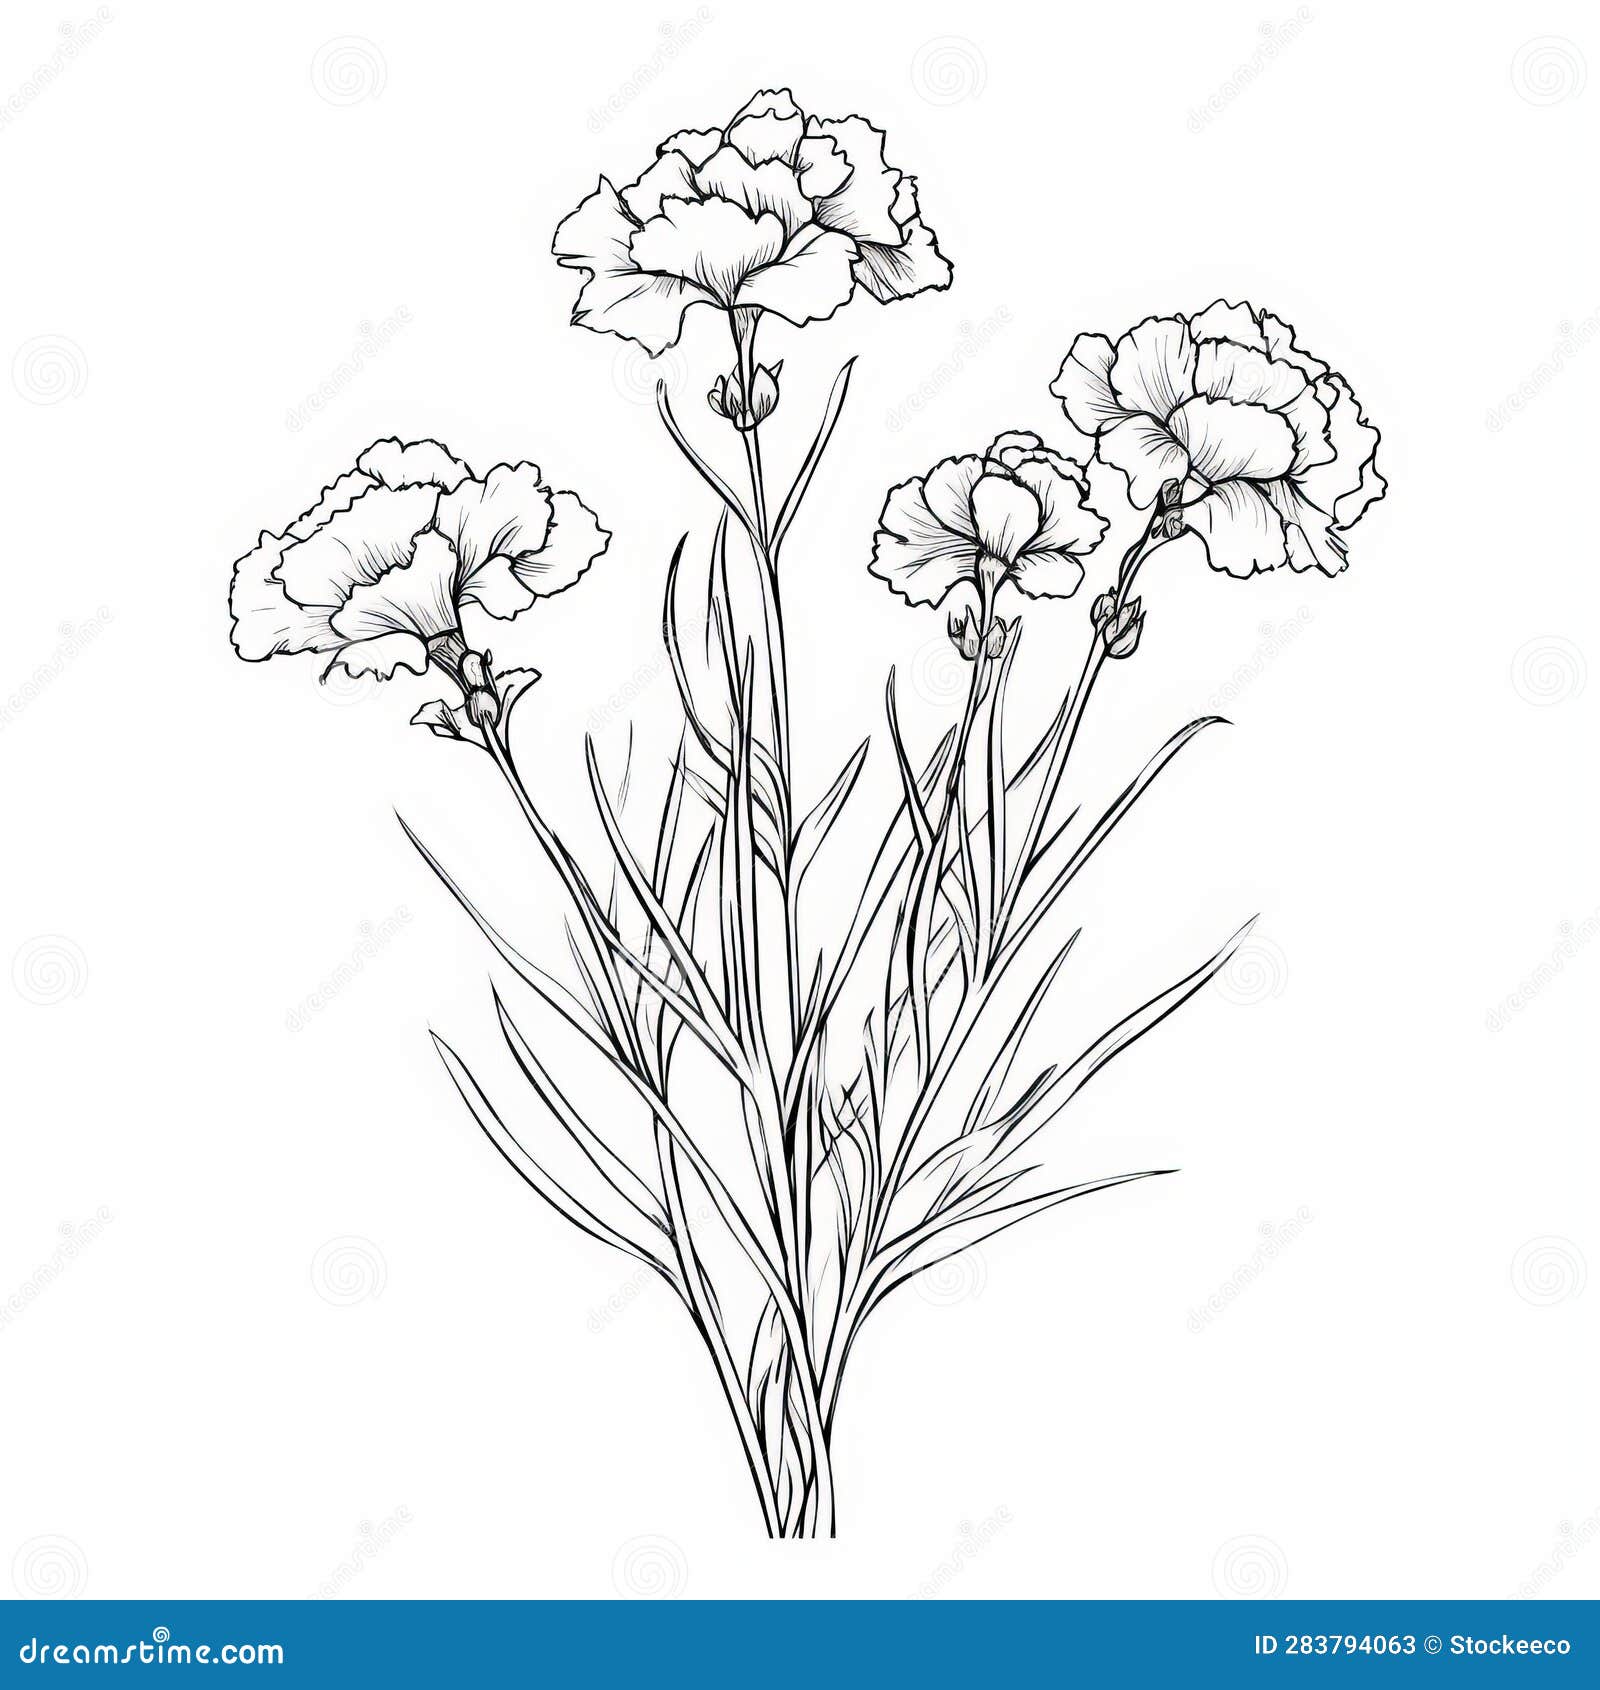 Minimalist White Carnation Sketch on White Background Stock ...